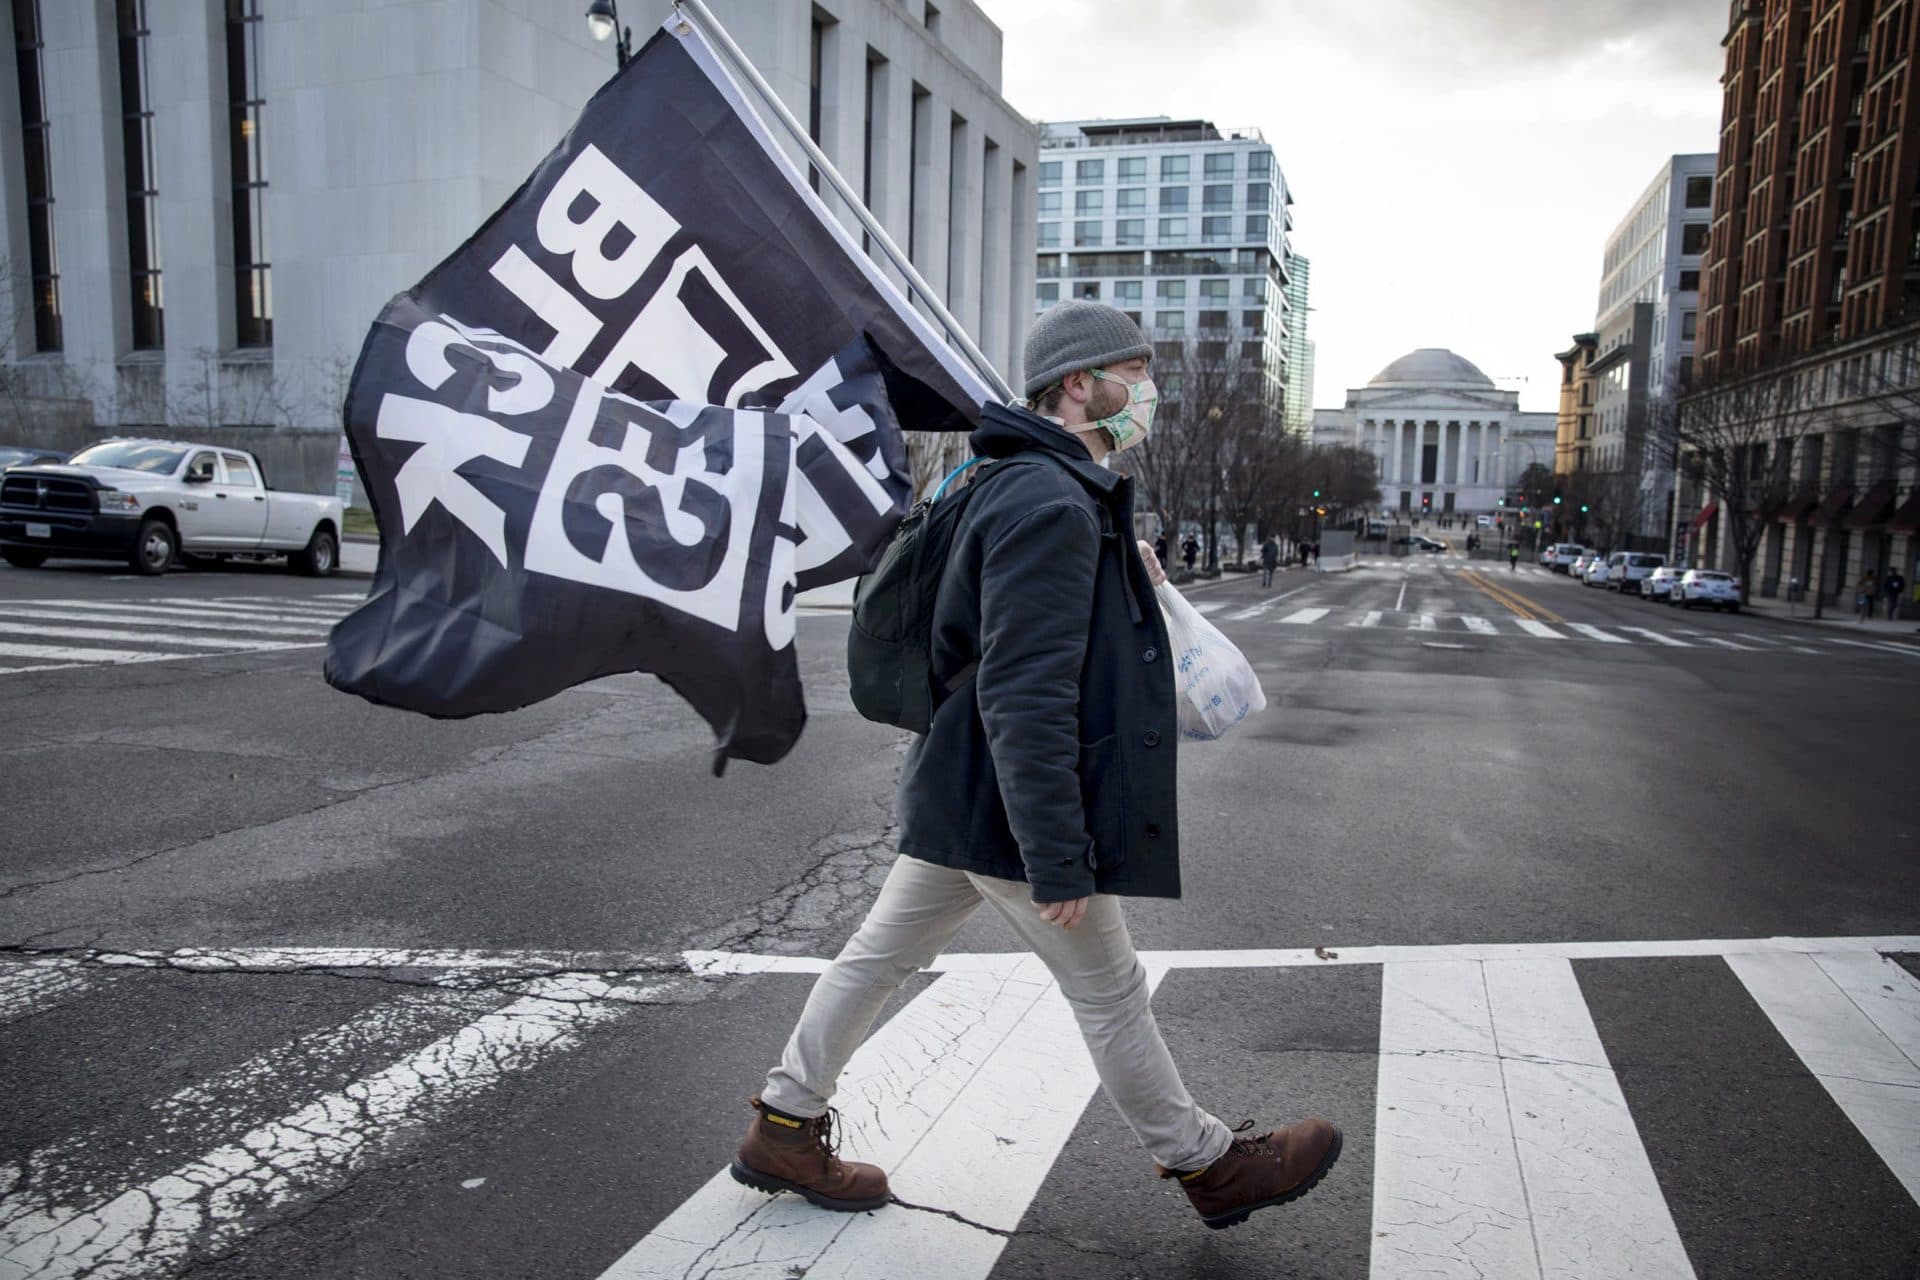 Jack Curtz, who lives in Boston, walks through downtown D.C. holding a Black Lives Matter flag. (Tyrone Turner/WAMU)